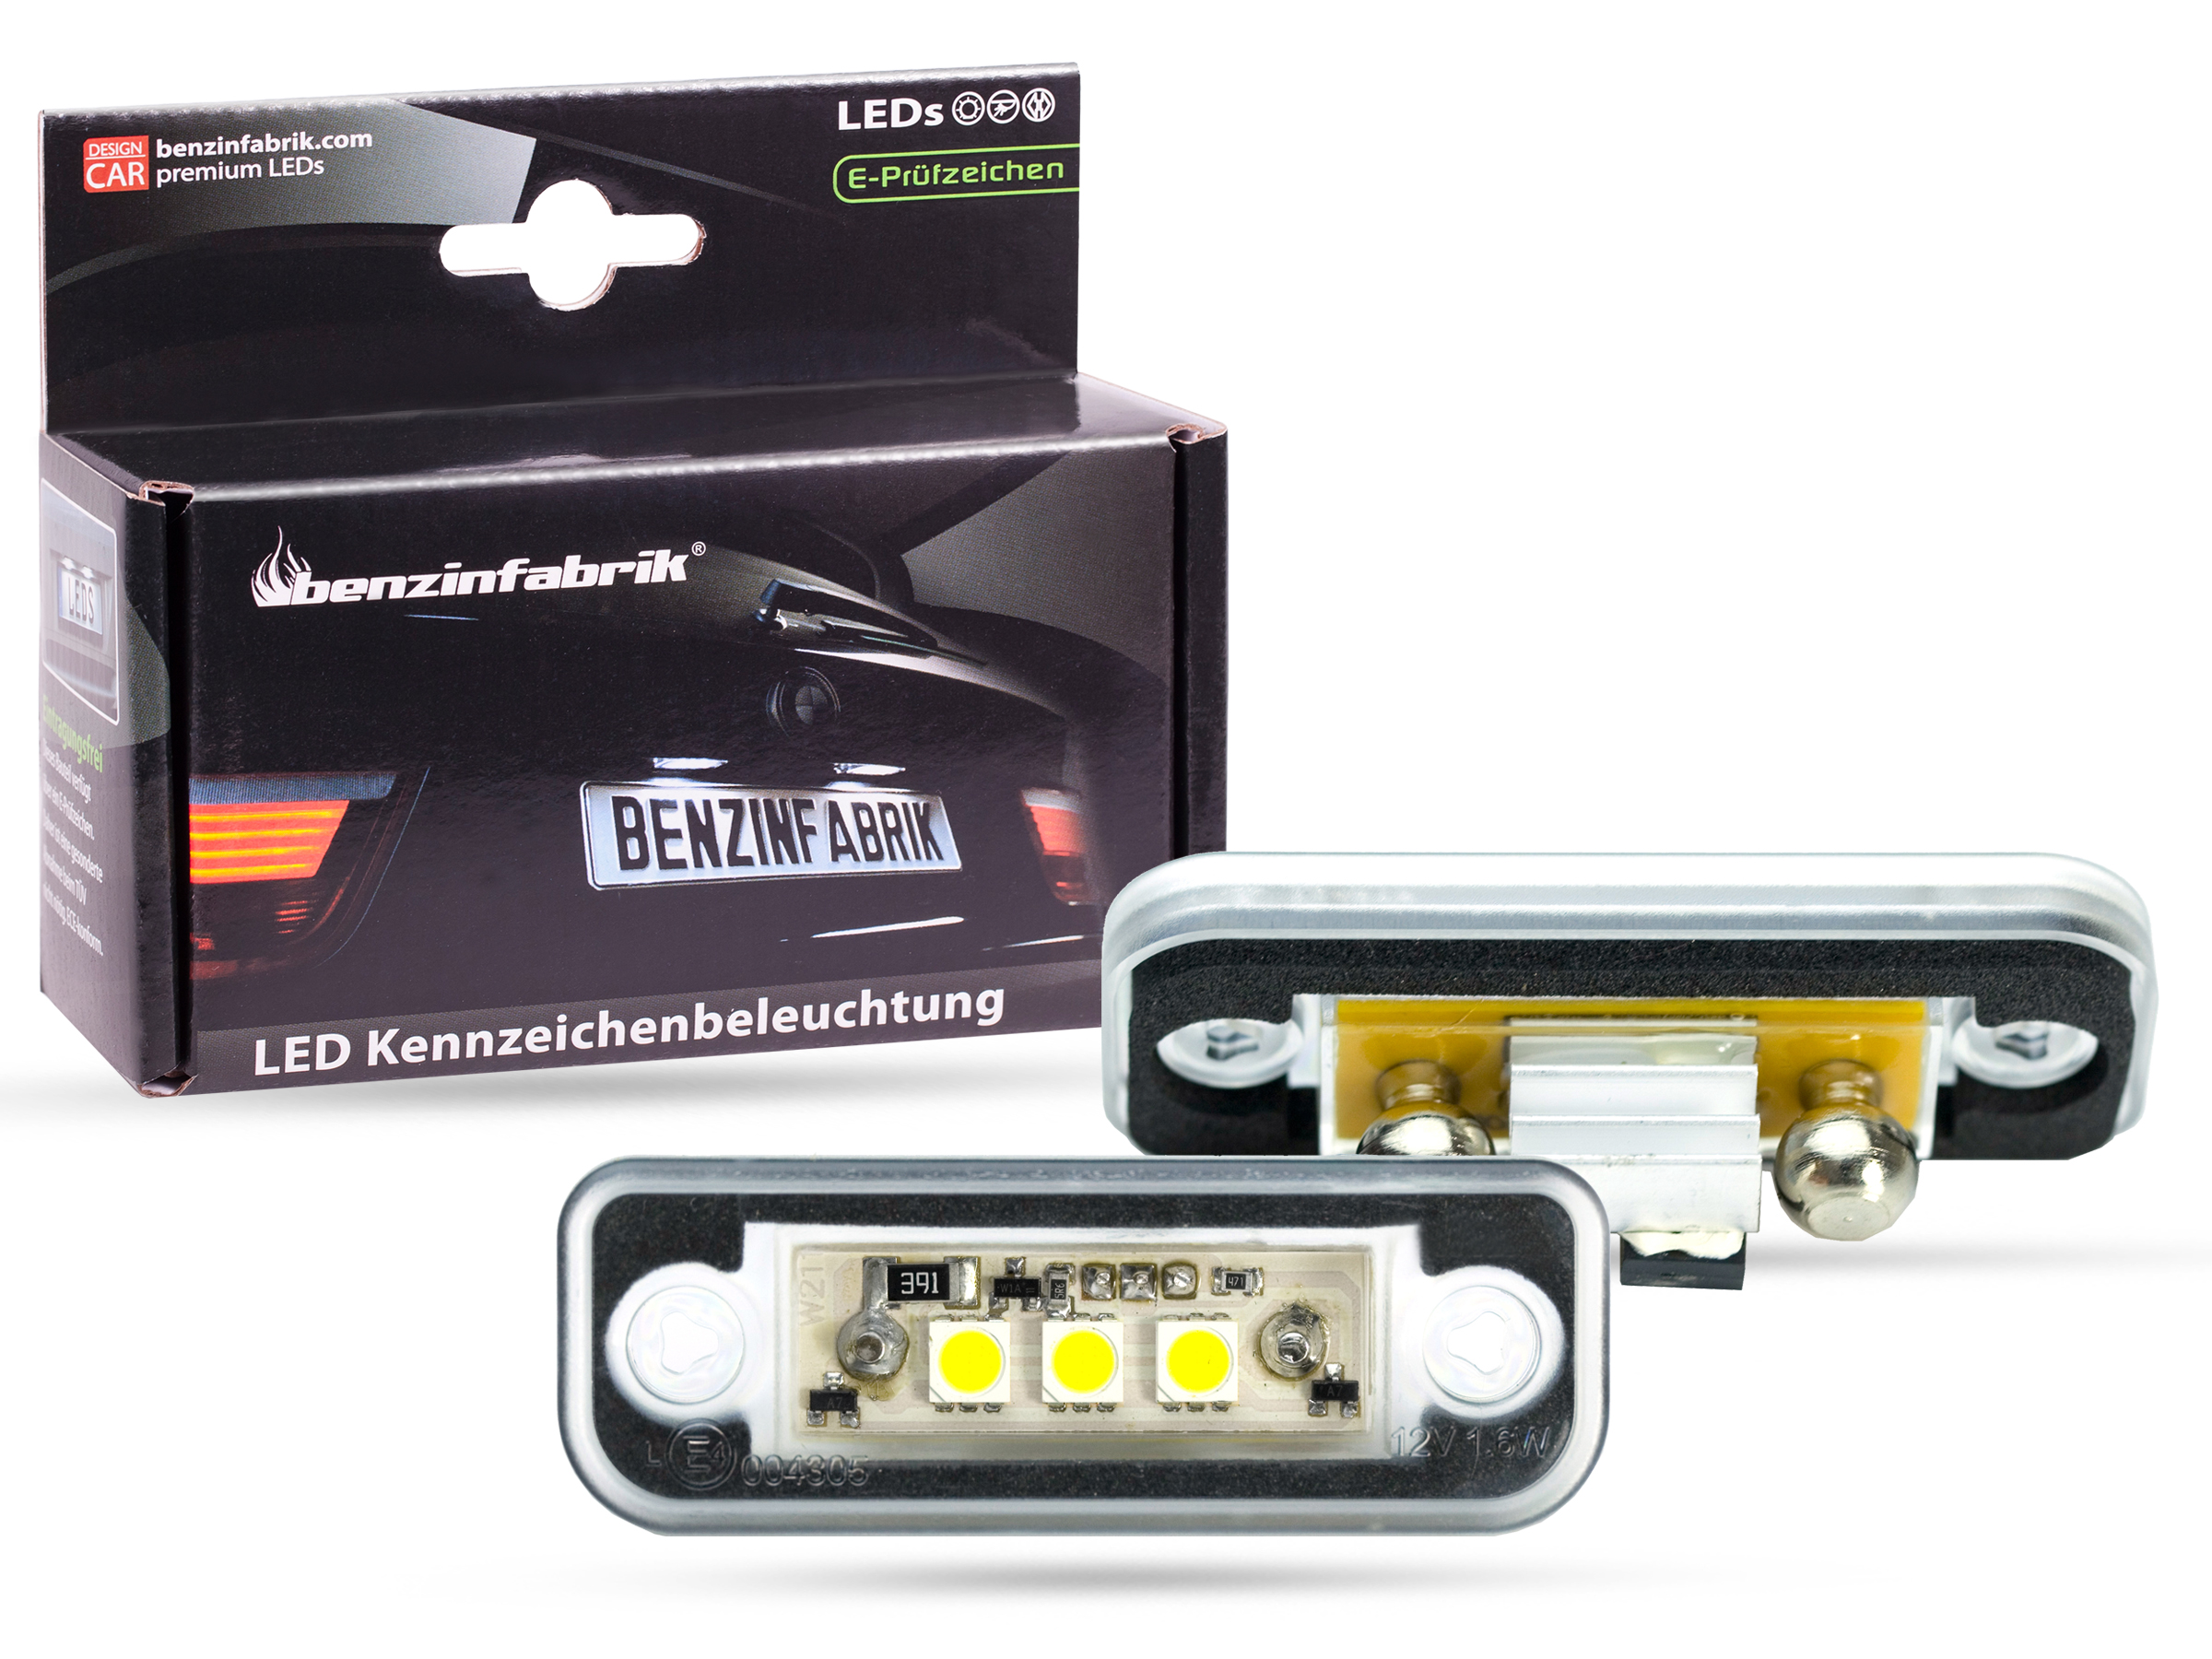 LED Kennzeichenbeleuchtung Module Mercedes E-Klasse W211 Bj. 02-09, mit E-Prüfzeichen, LED Kennzeichenbeleuchtung für Mercedes, LED Kennzeichenbeleuchtung